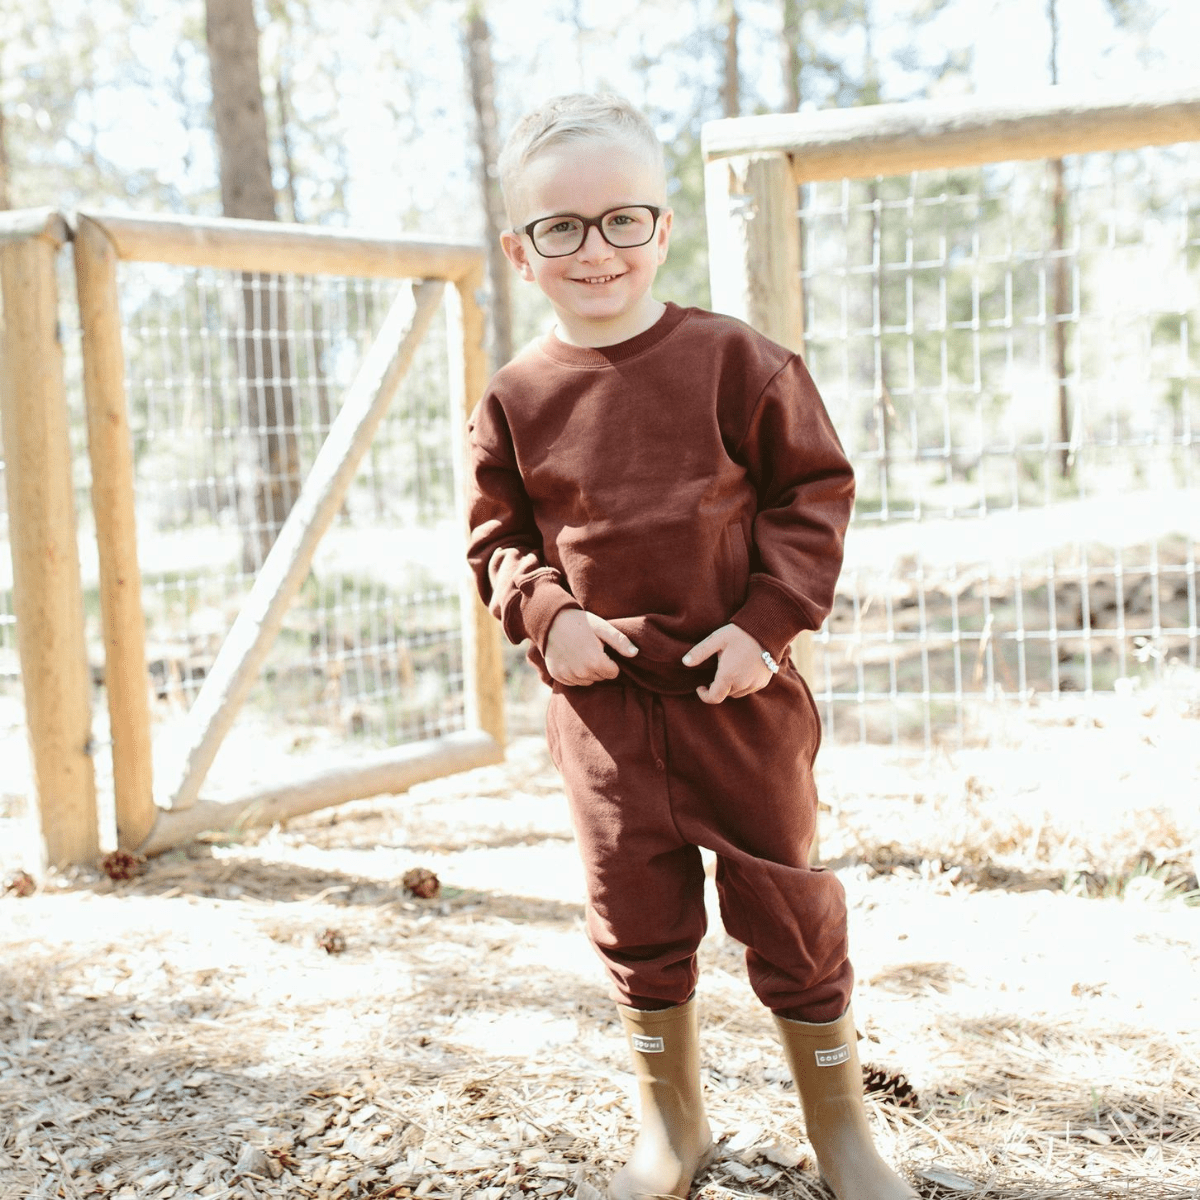 Children's 2 Piece Cotton Sweat Suit Set by Blu and Ben – BeWea